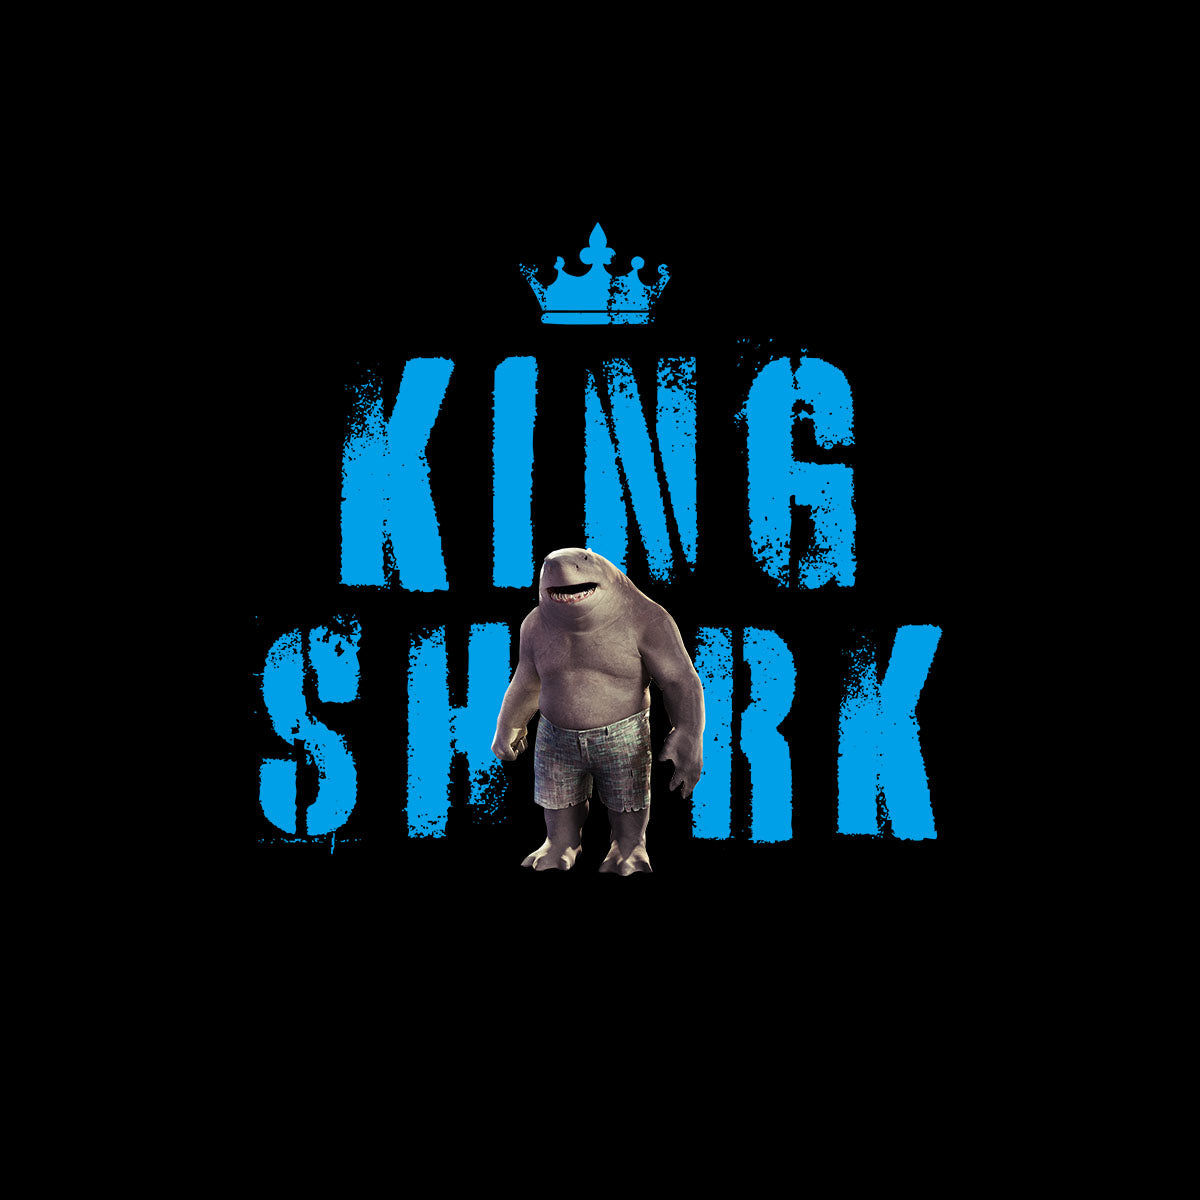 King Shark DC Funny Suicide Squad Typography Movie Unisex Tank Top - Kuzi Tees